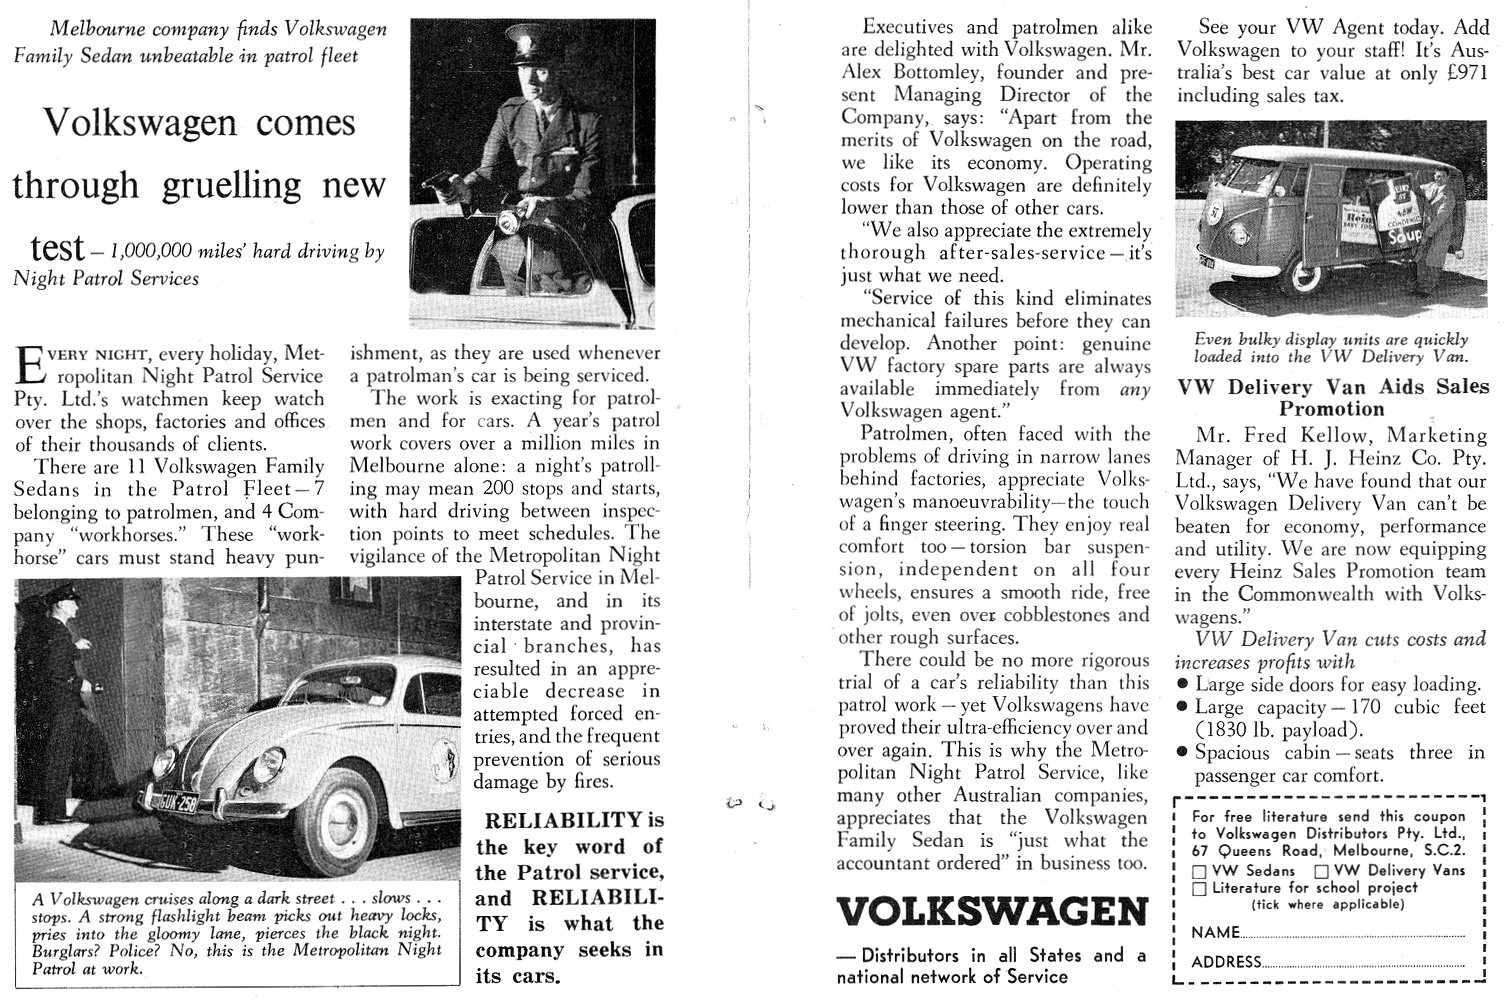 1958 Volkswagen Comes Through Gruelling New Test